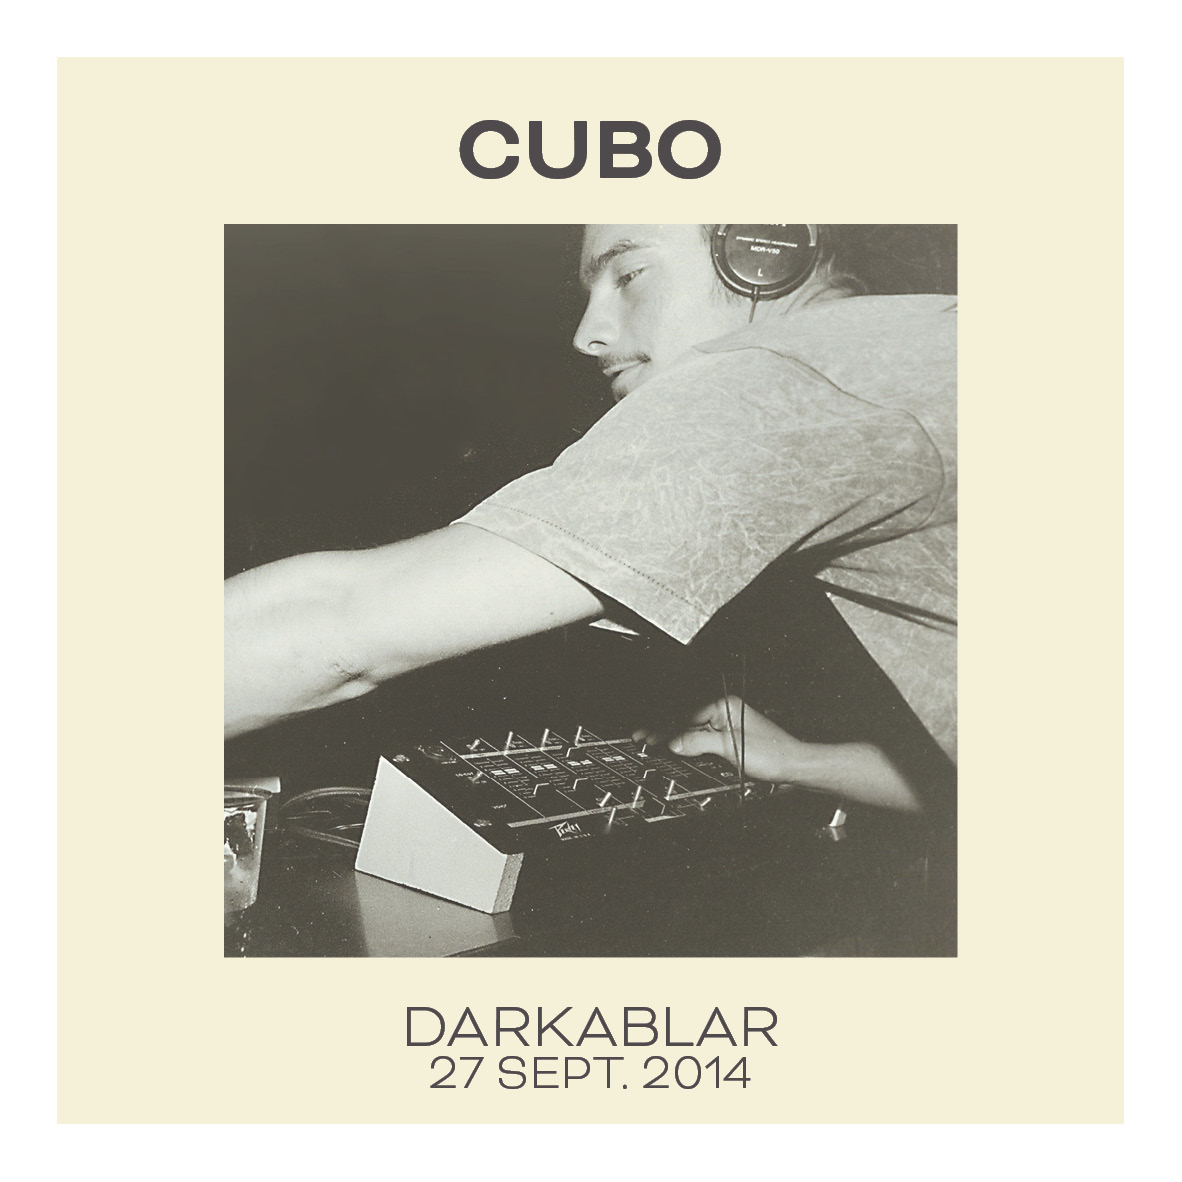 dj cubo, darkablar 27 sept. 2014